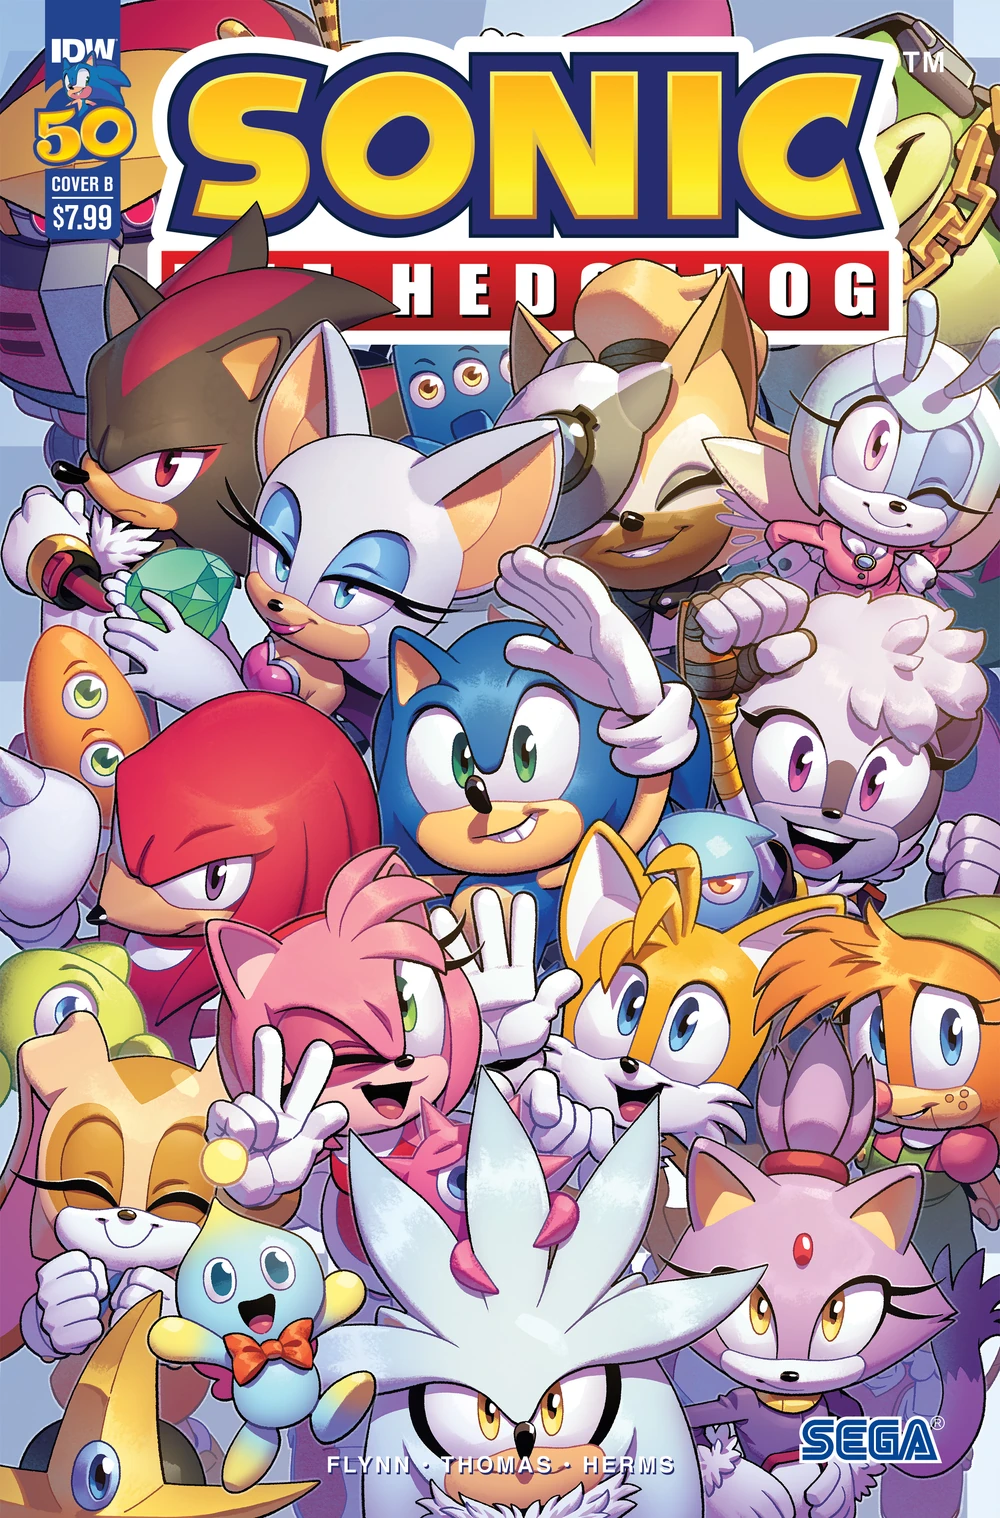 Sonic The Hedgehog #50 Cover B